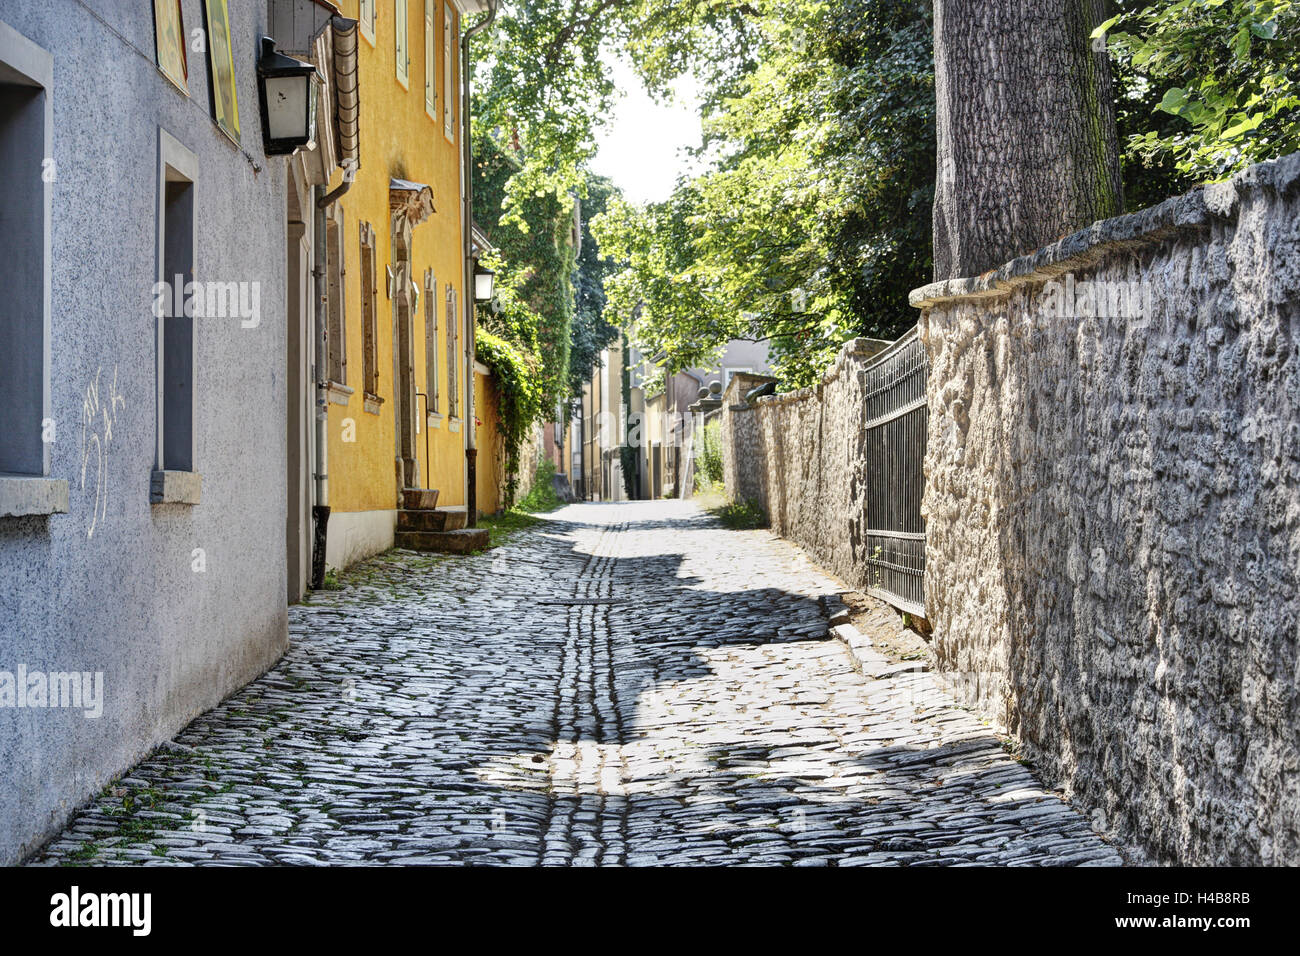 Germany, Thuringia, Weimar, alley, cobblestones, Stock Photo